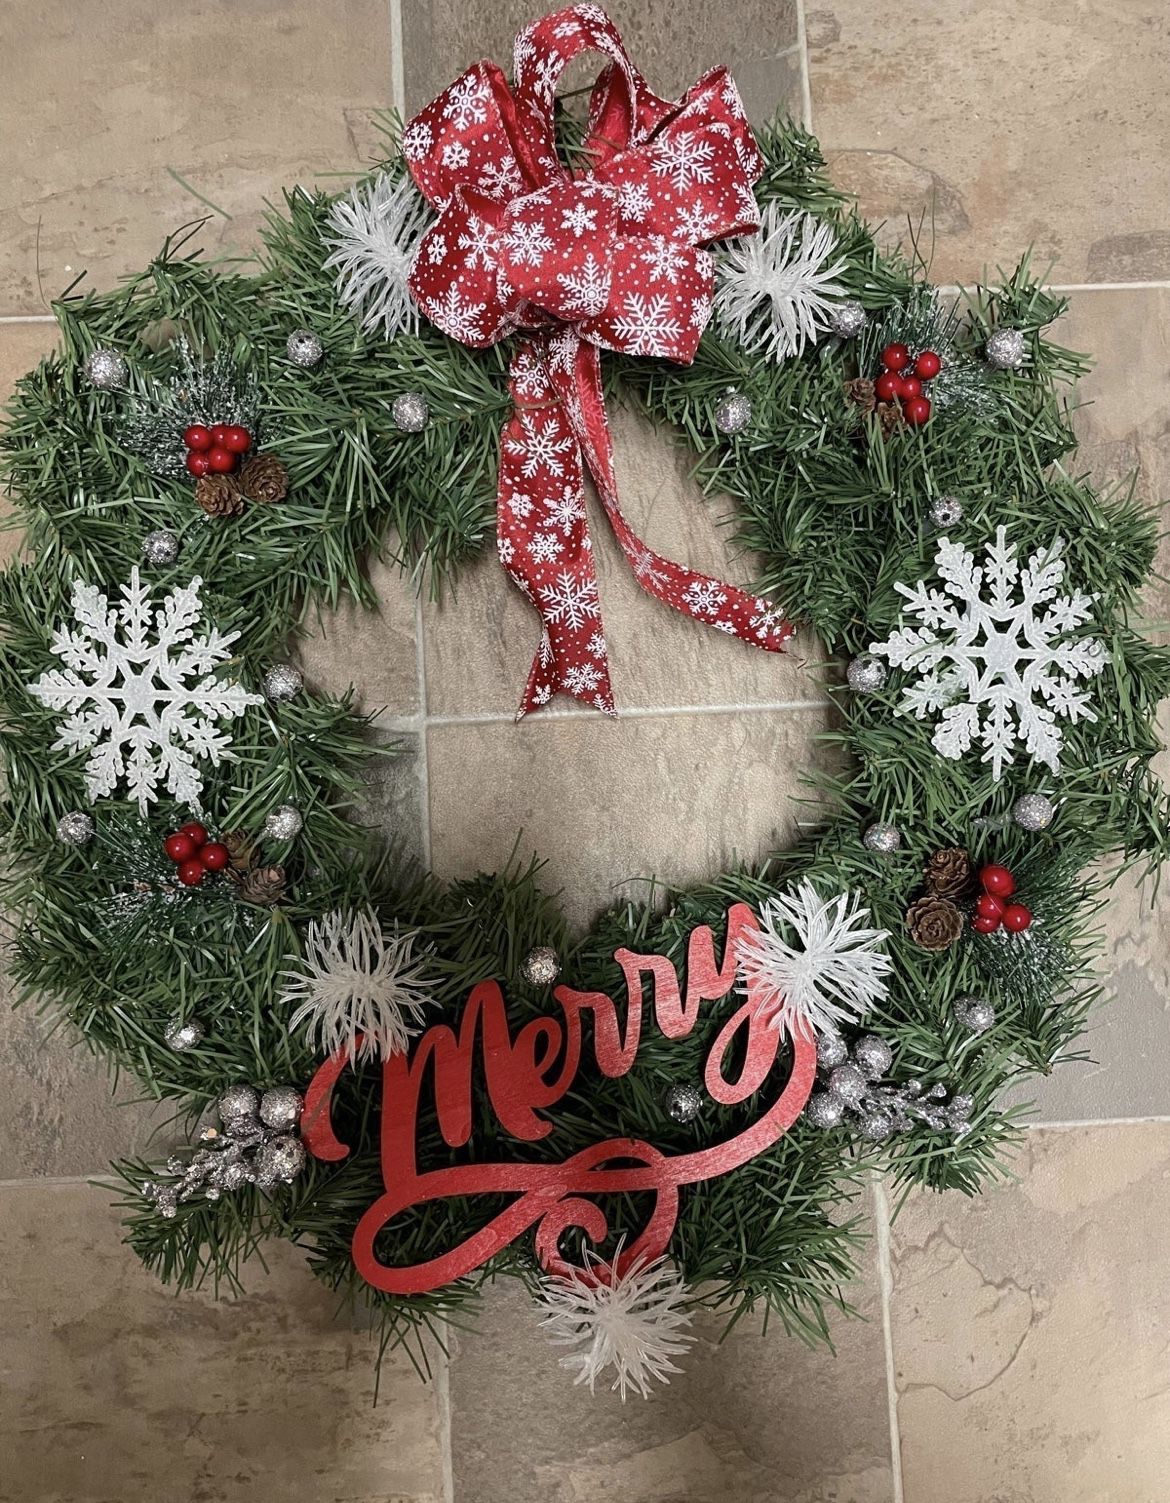 Handmade/Homemade “Merry” Wreath